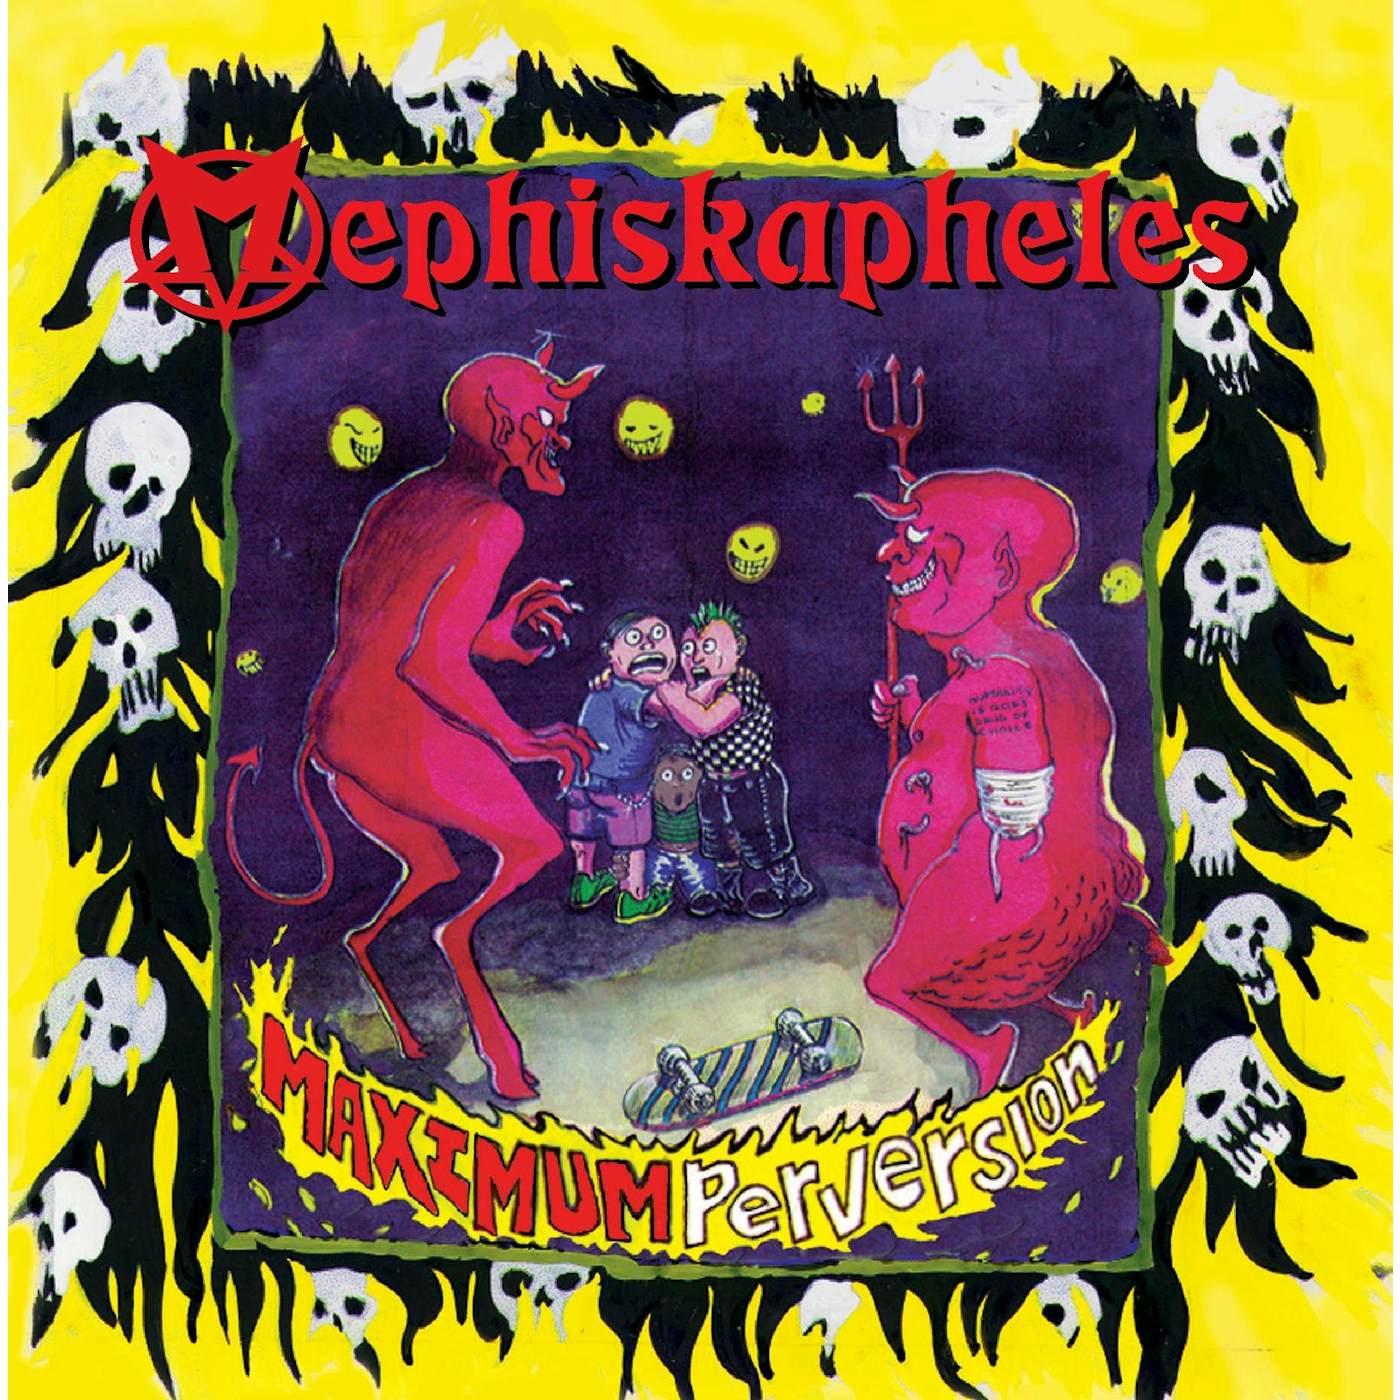 Mephiskapheles Maximum Perversion Vinyl Record